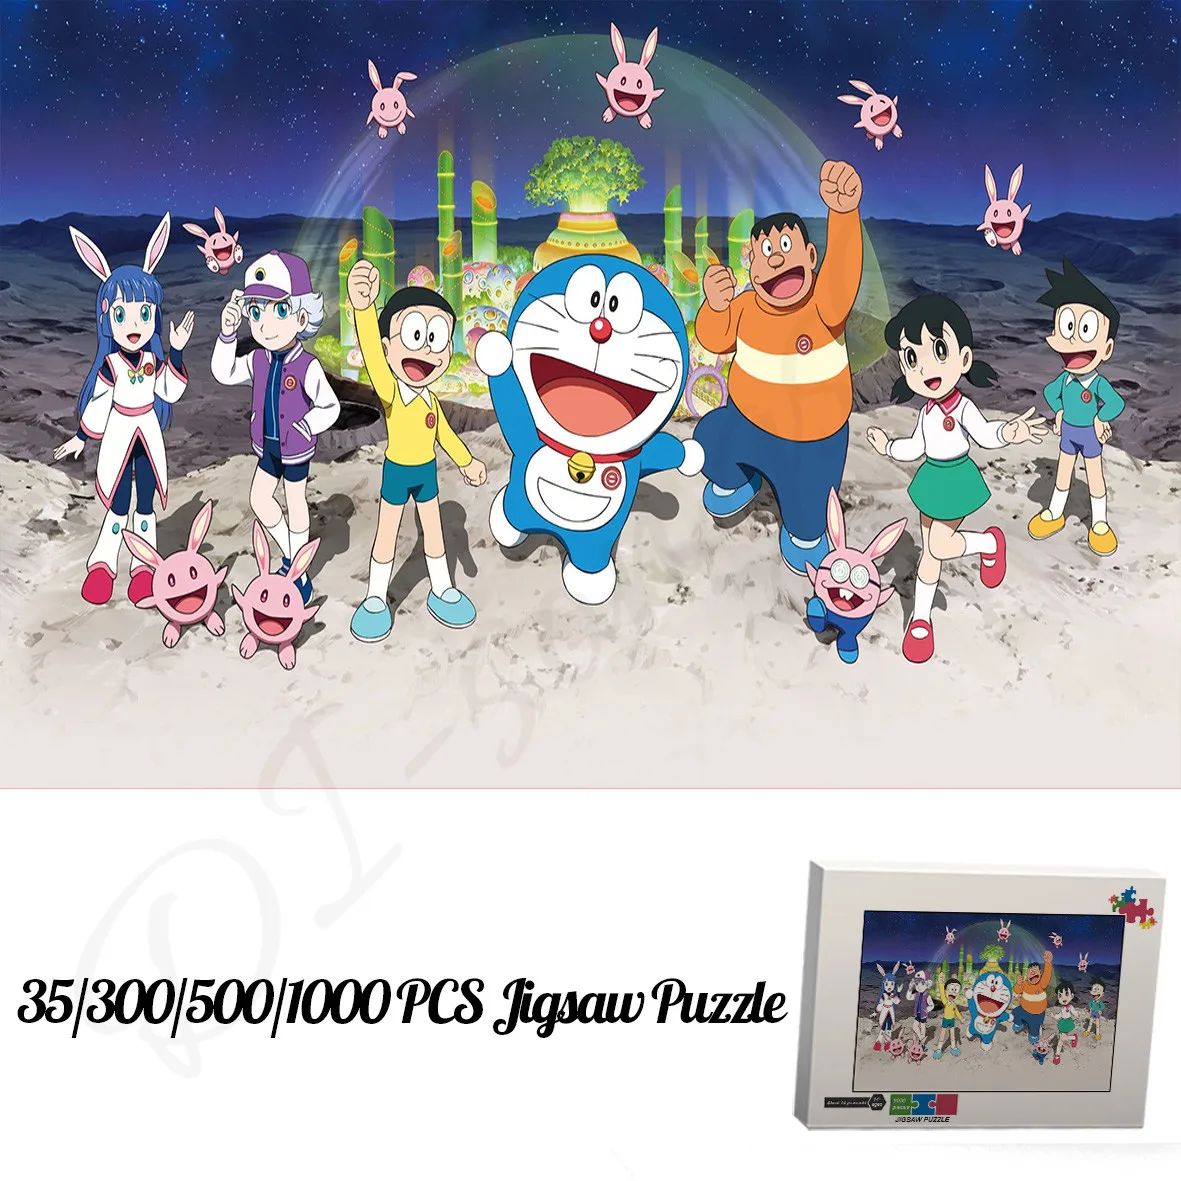 Doraemon: Nobita's Lunar Adventures Jigsaw Puzzles Bandai Cartoon Movie 35 300 500 1000 Pieces Wooden Puzzles Educational Toys alice’s adventures in wonderland